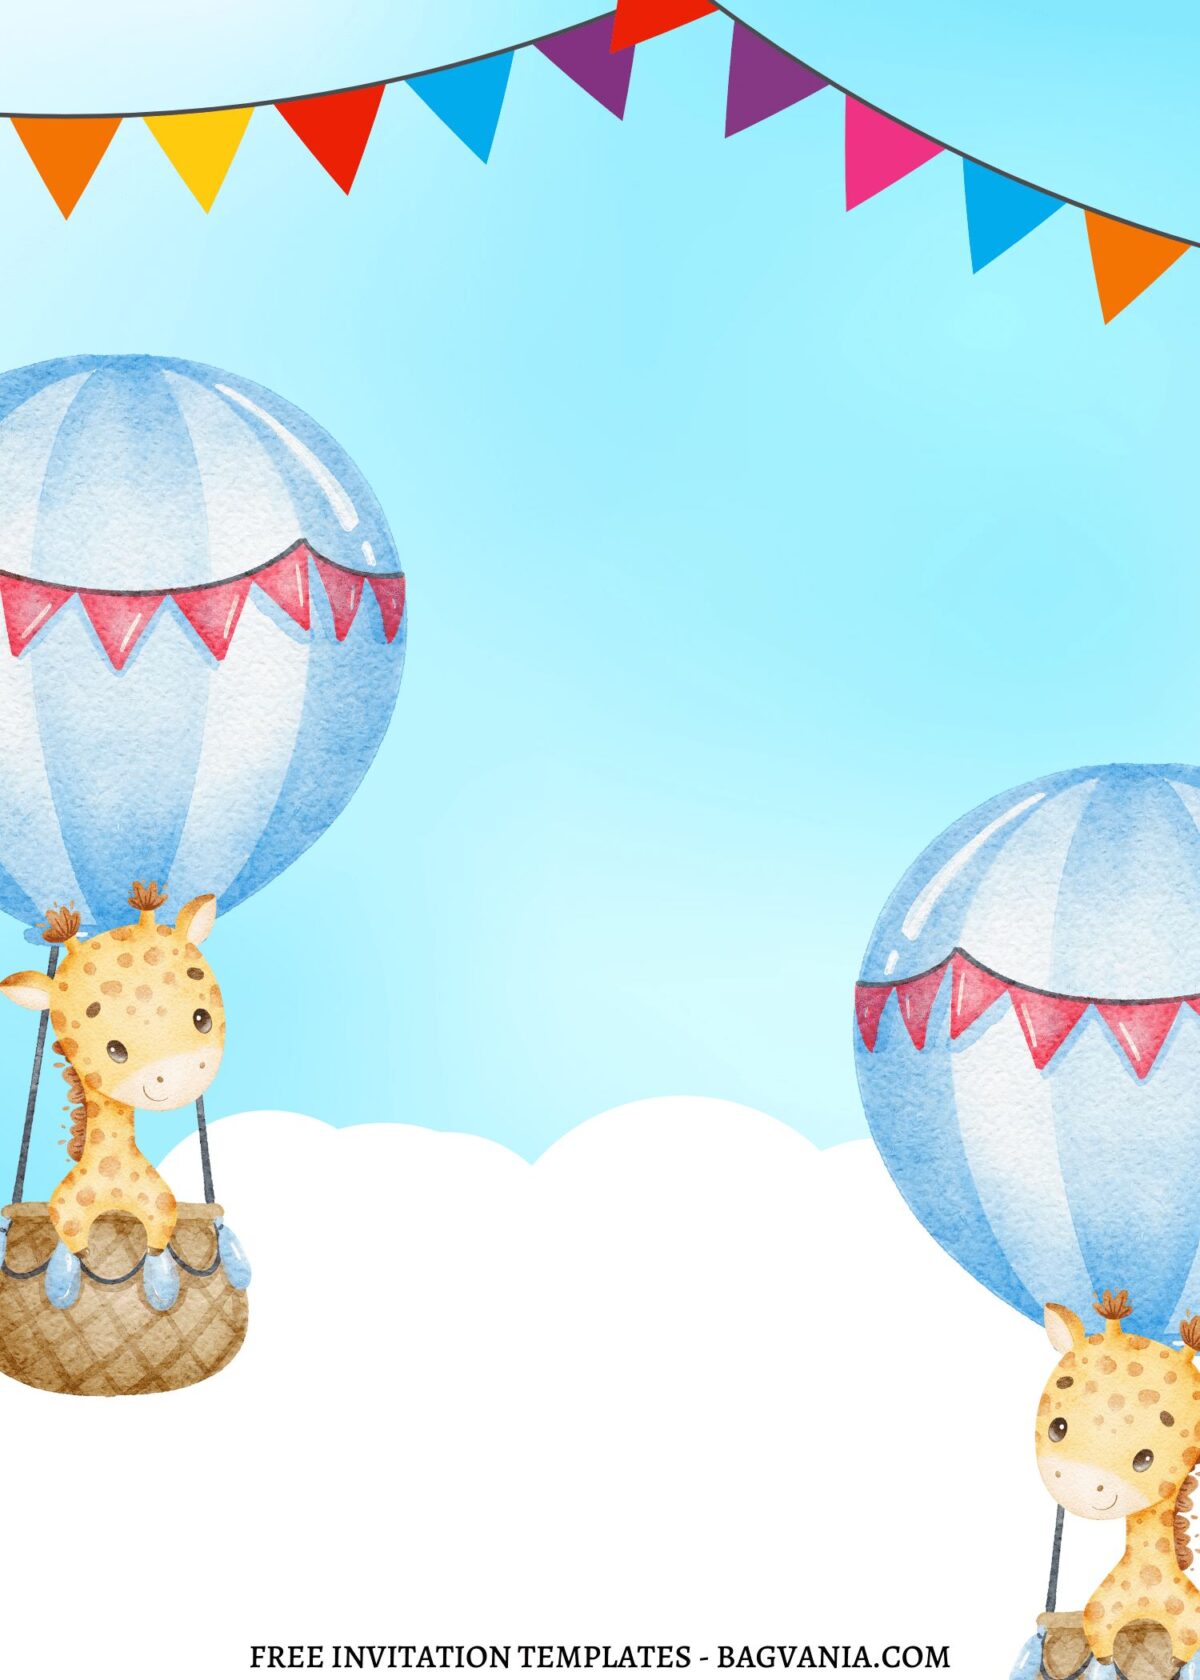 FREE EDITABLE - 10+ Safari Hot Air Balloon Canva Birthday Invitation Templates with bunting flags